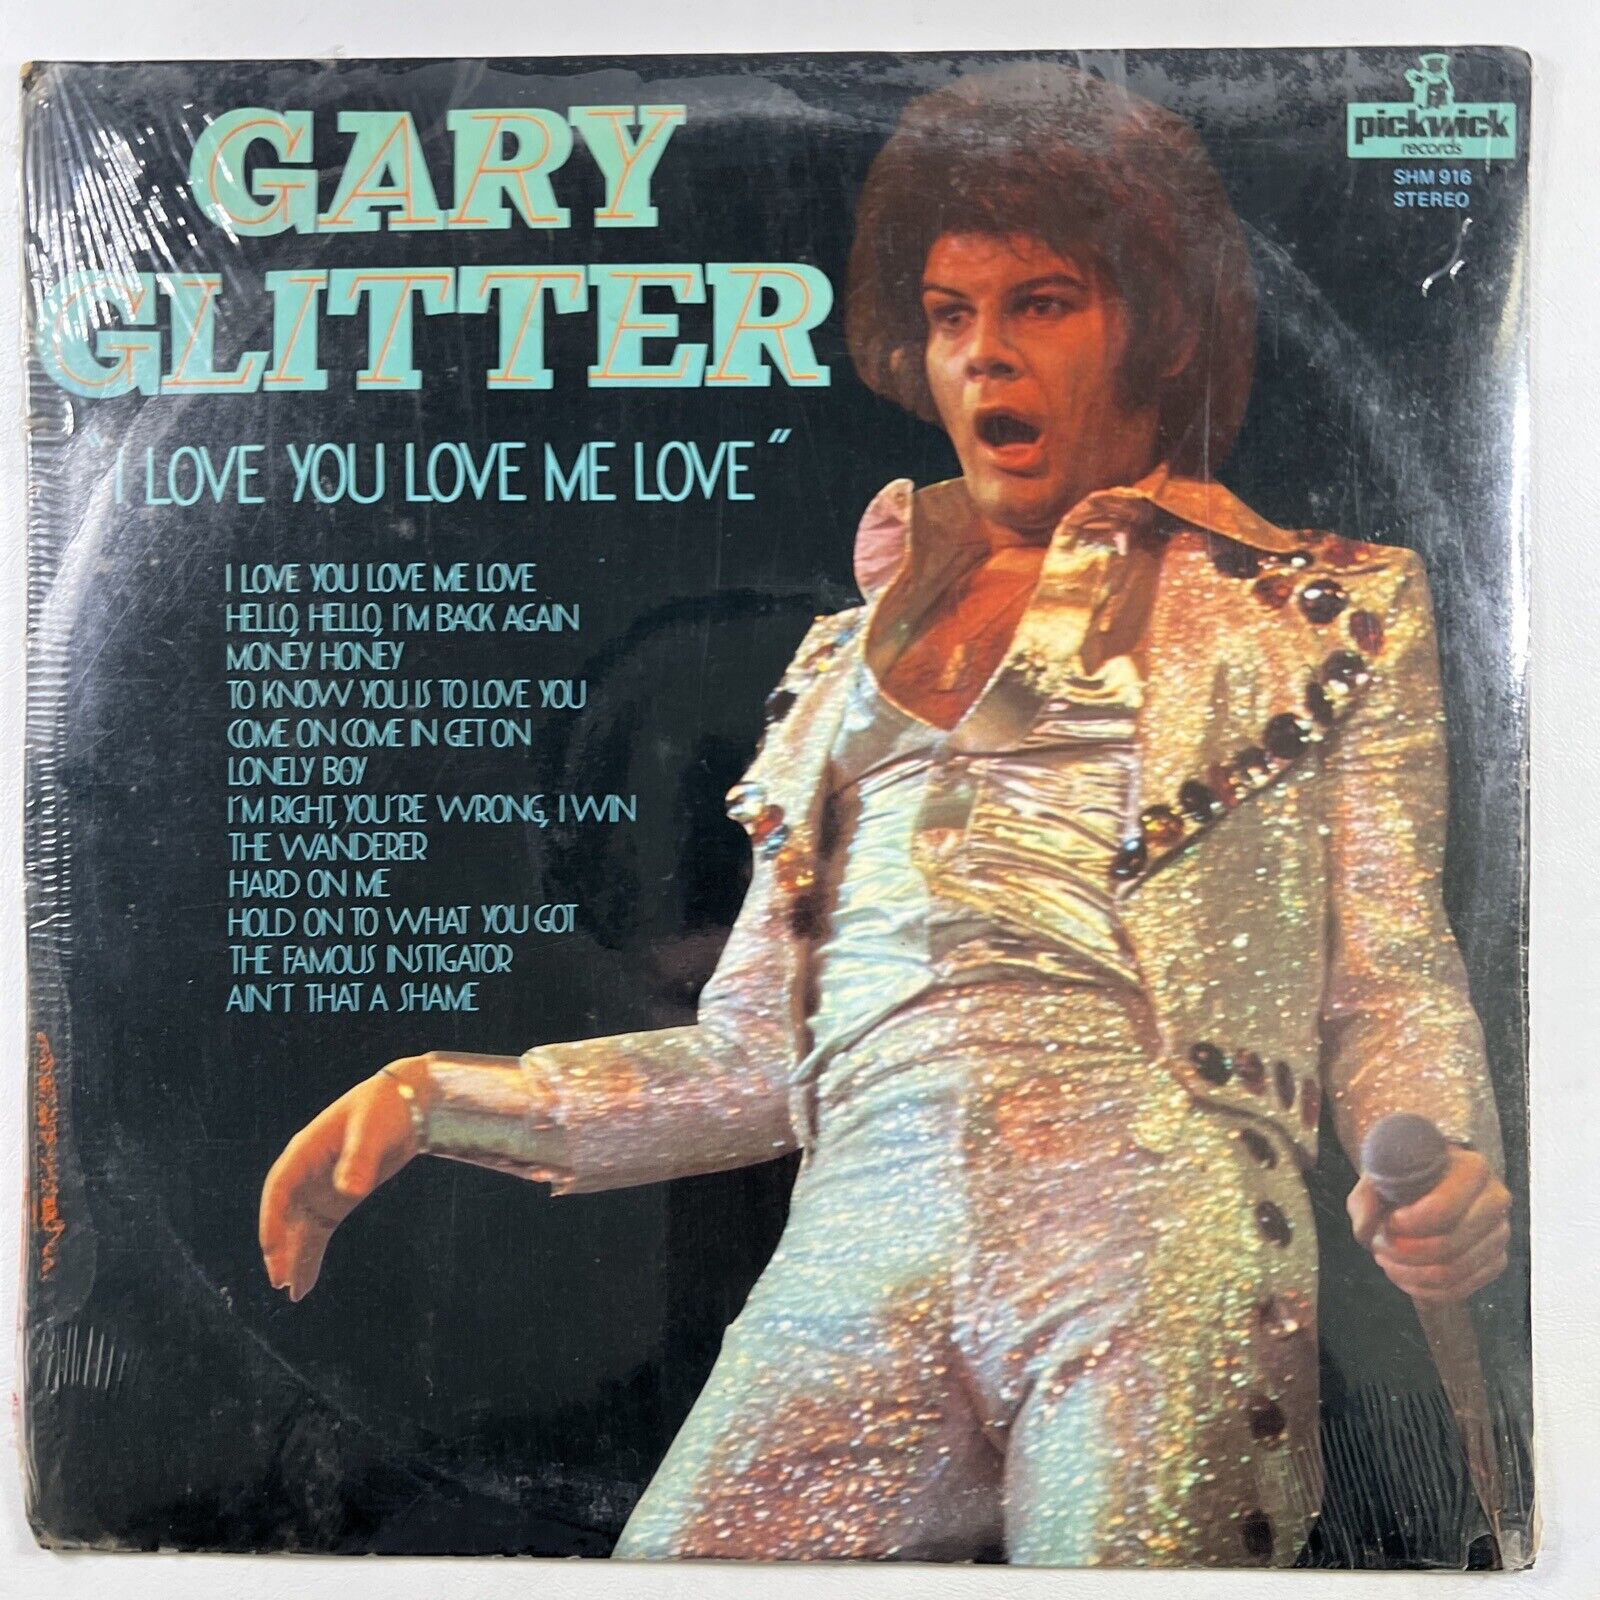 Gary Glitter ‎”I Love You Love Me Love” LP/Pickwick SHM 916 (Sealed) UK 1977